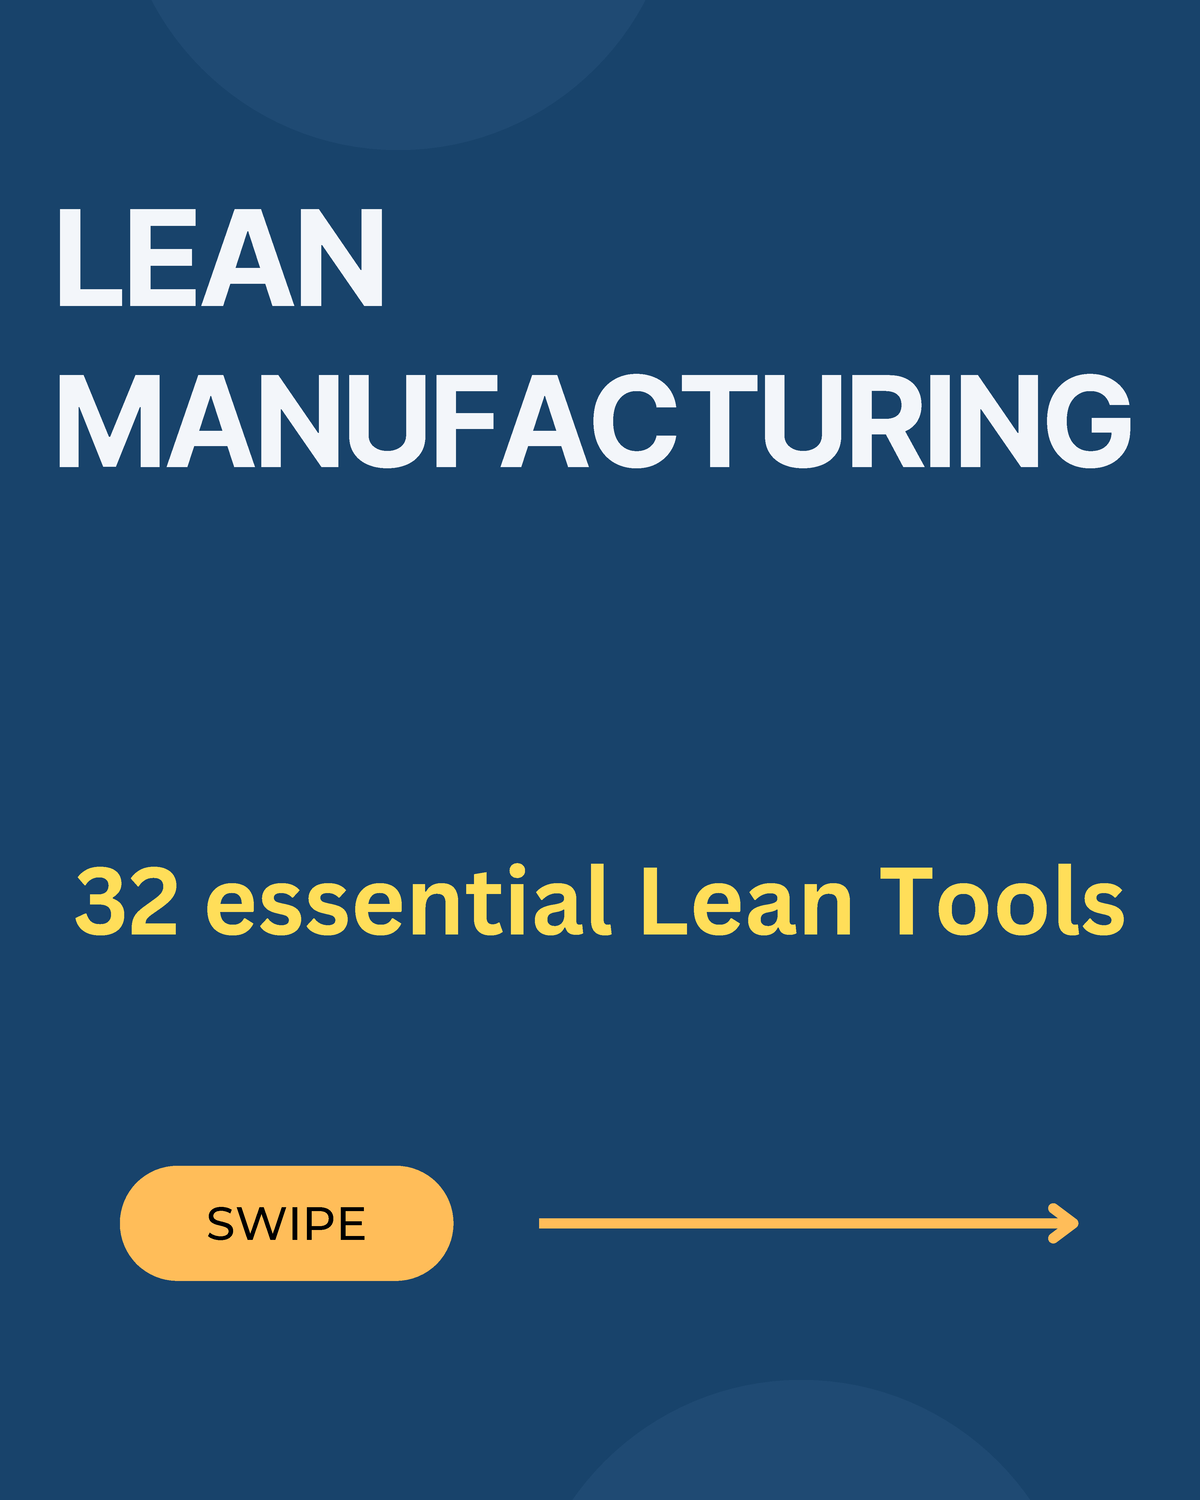 Lean Manufacturing Tools Lean Manufacturing Swipe 32 Essential Lean Tools 5s 2839